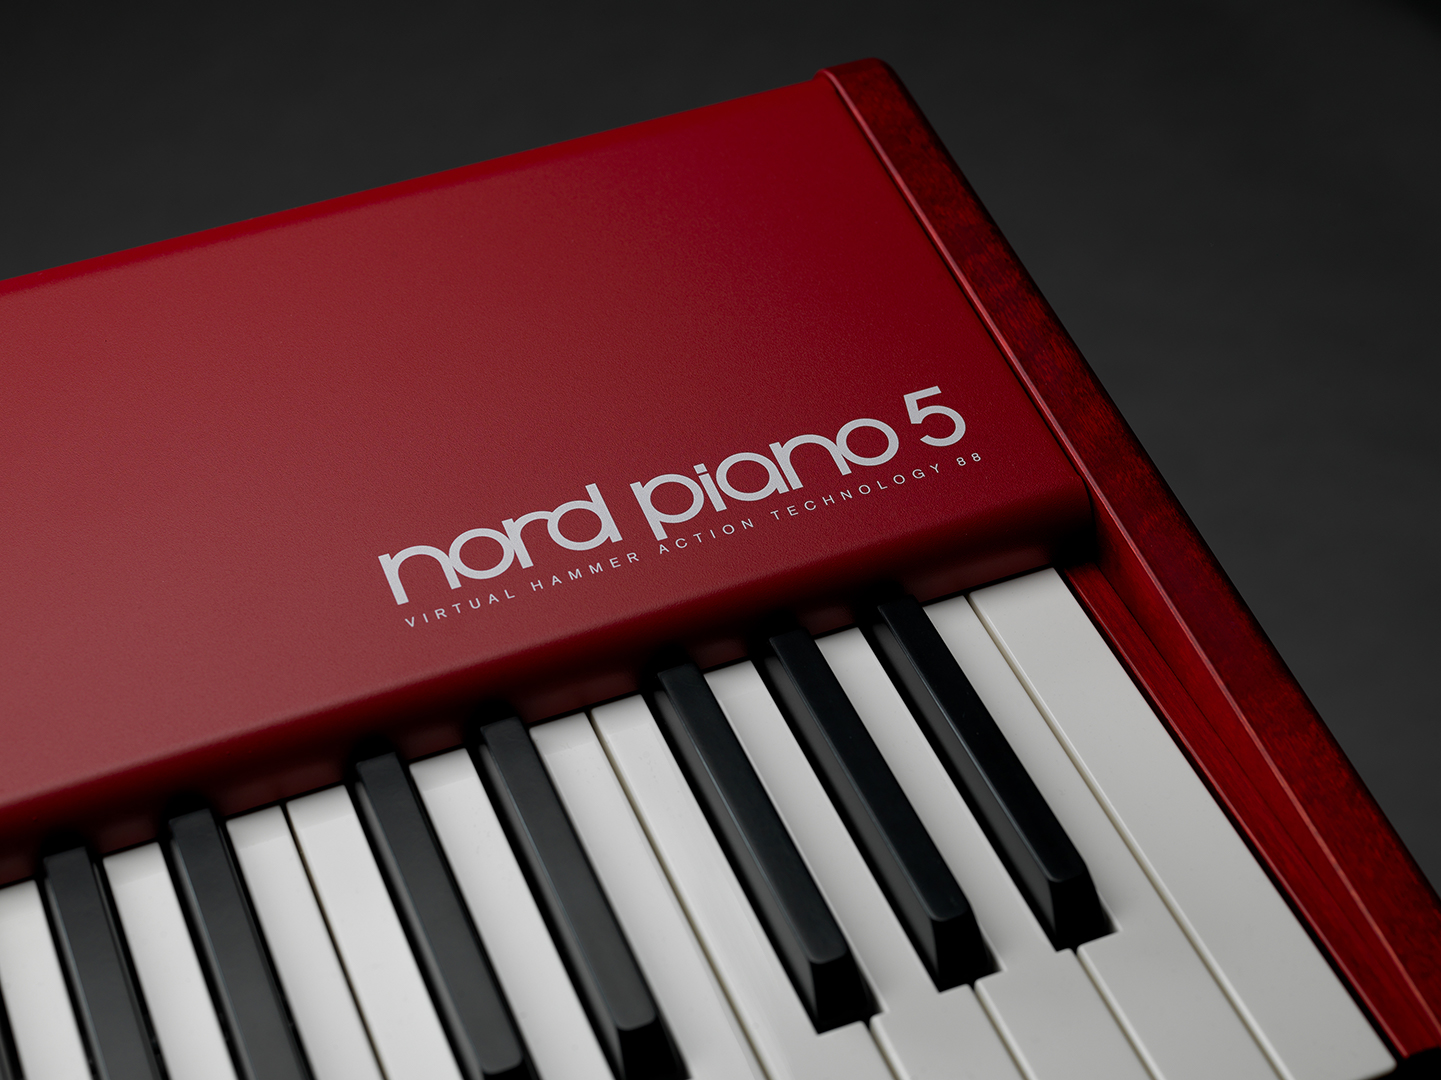 Nord Piano 5  73